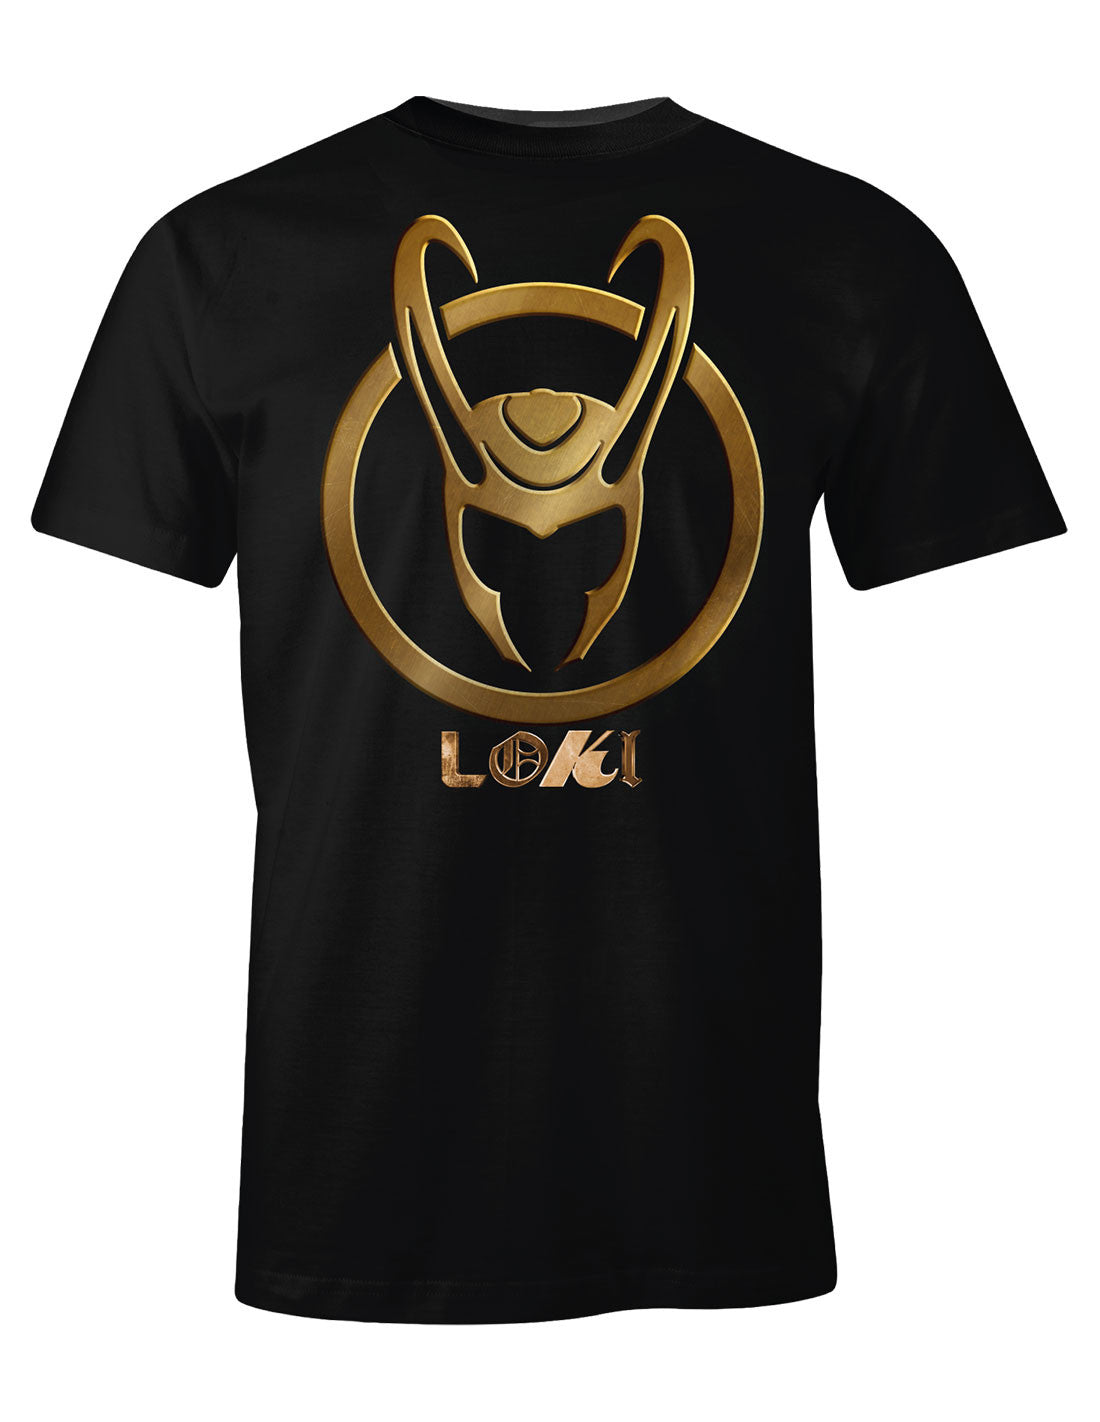 Loki Marvel T-shirt - Loki Helmet